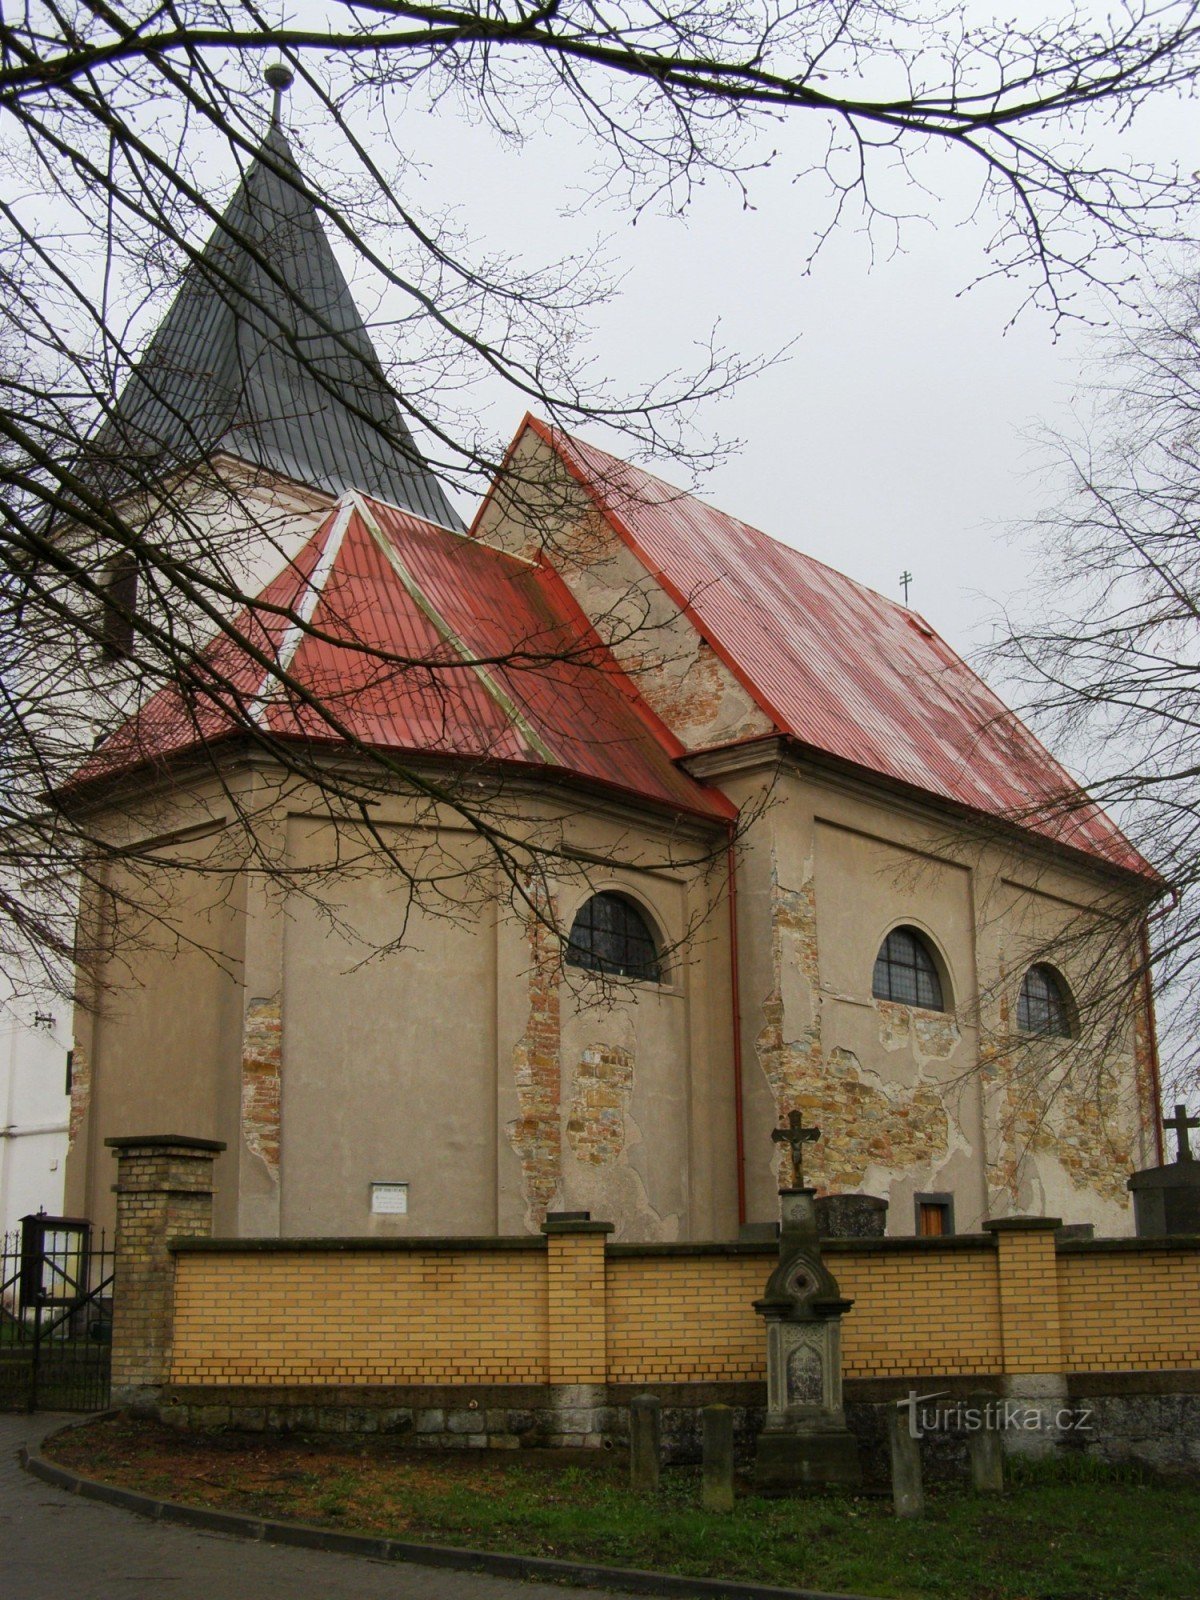 Šachov - Kerk van de Heilige Drie-eenheid